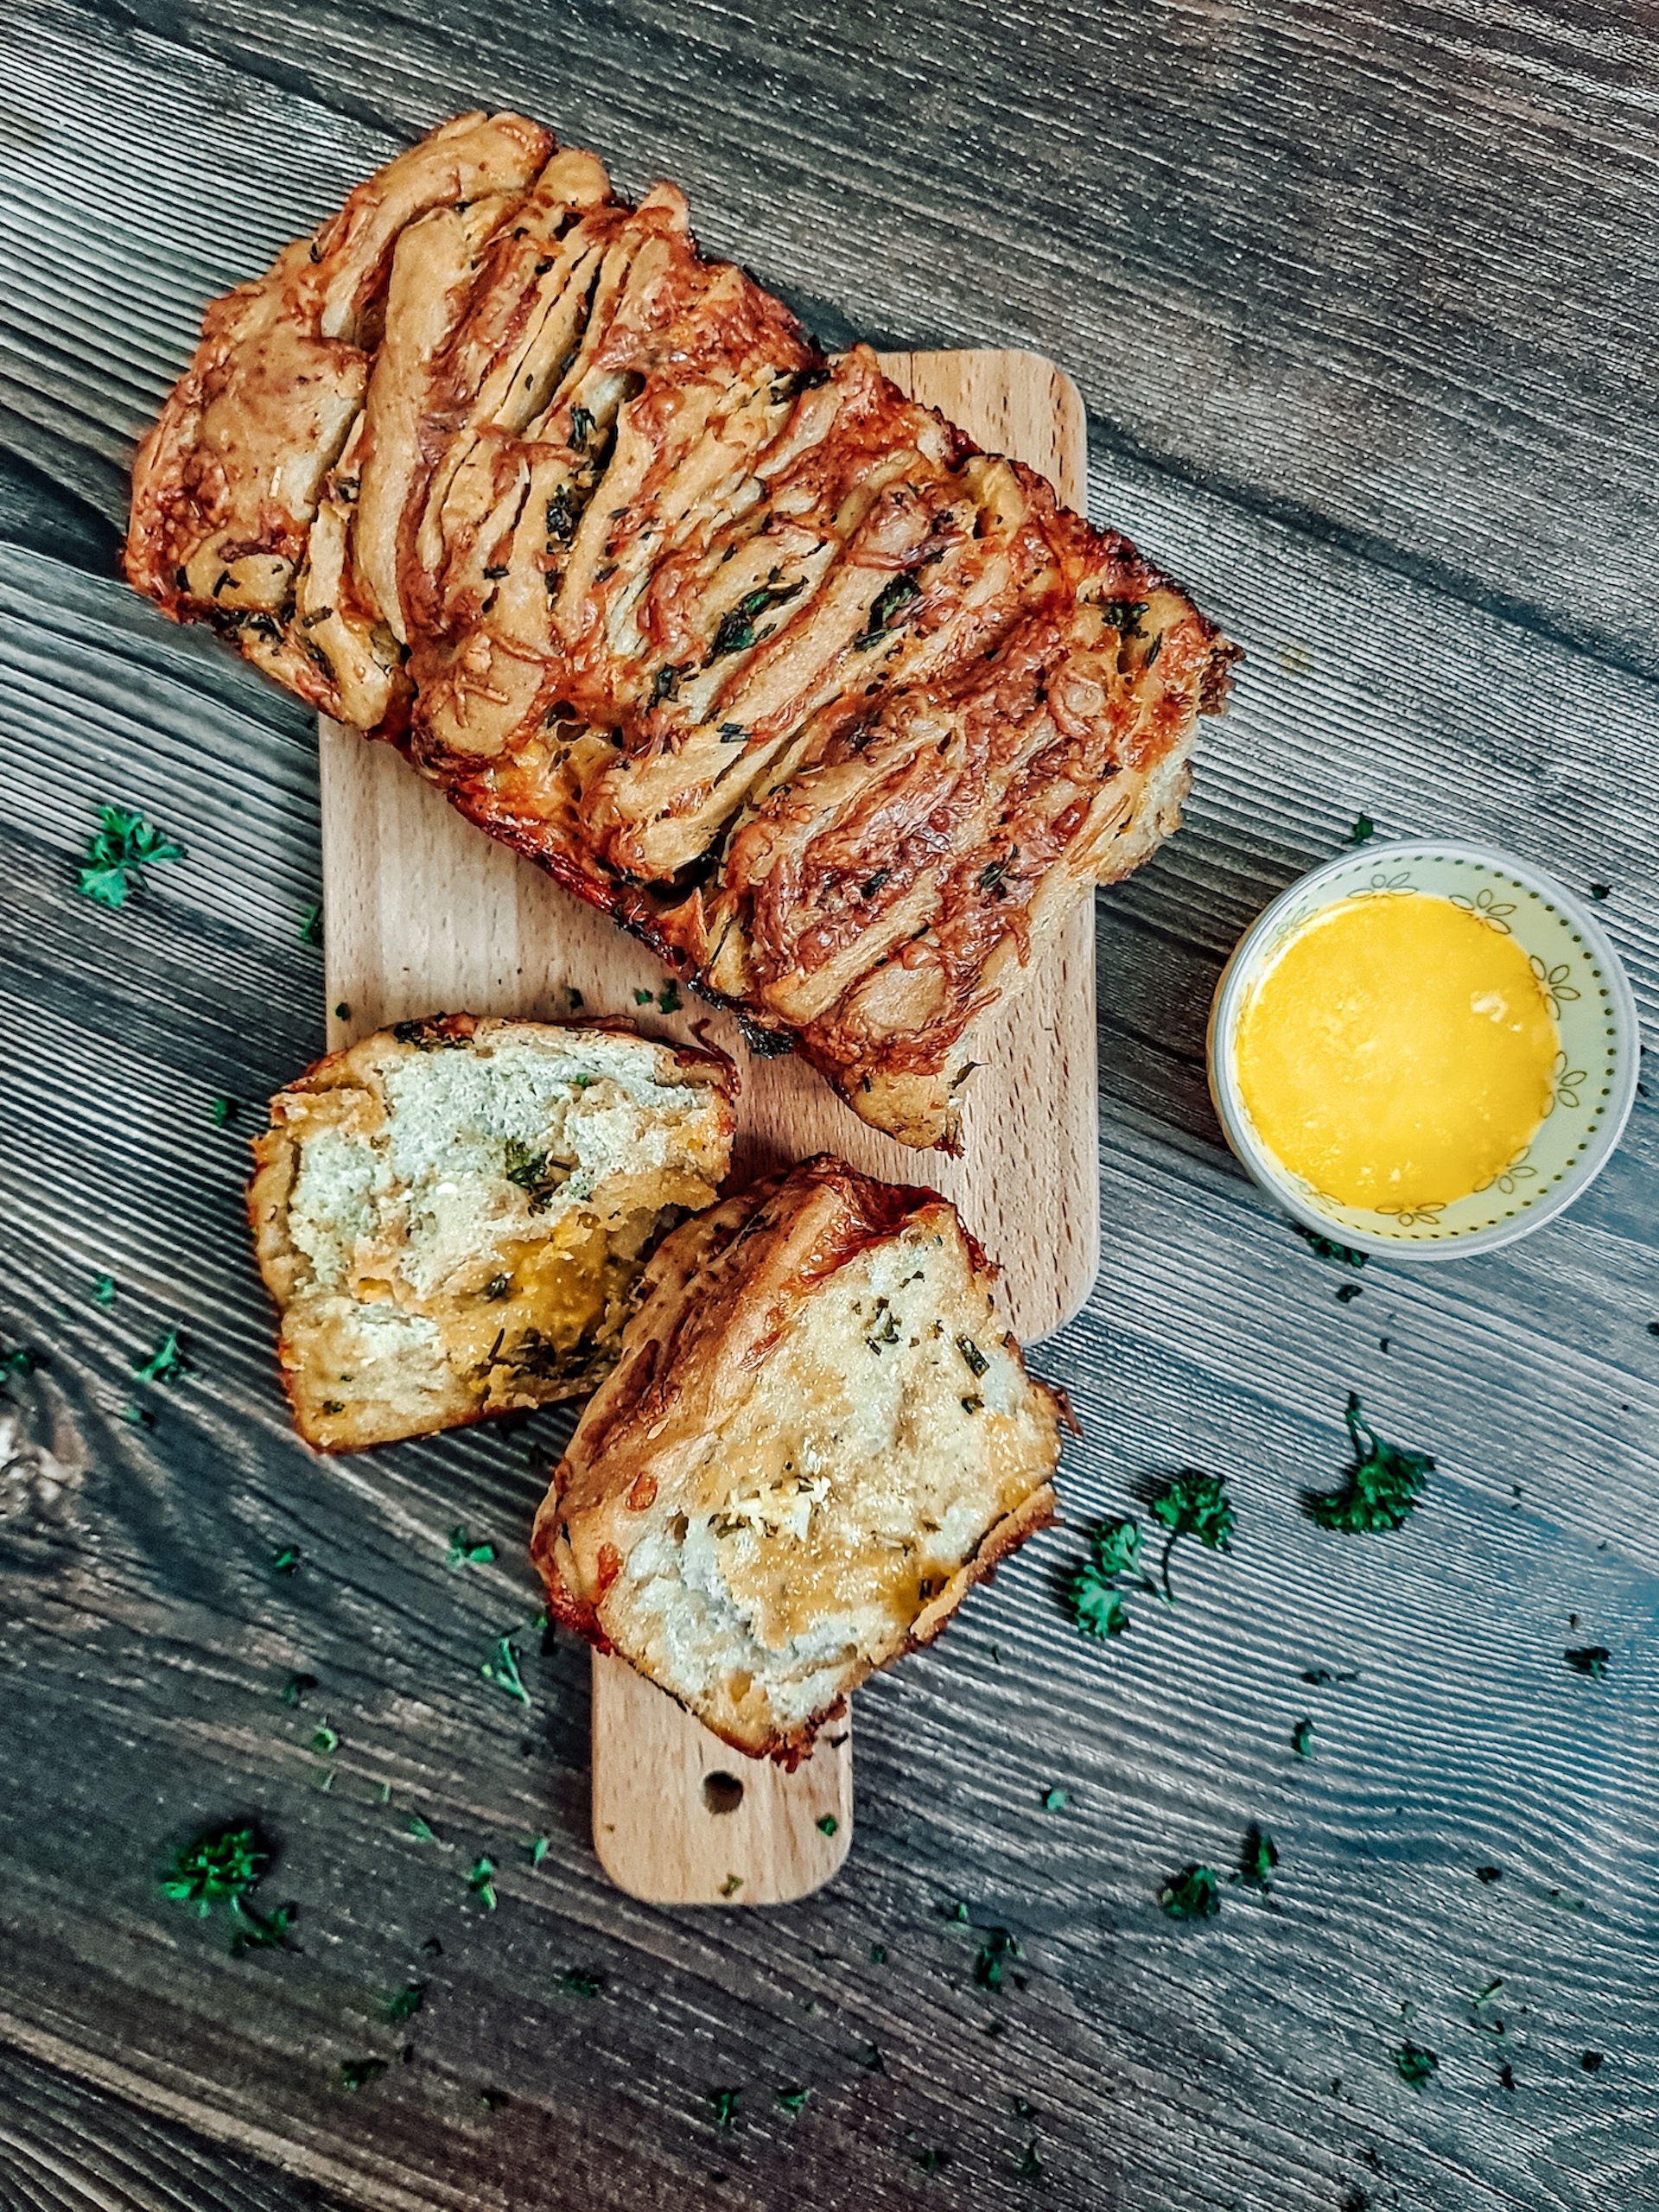 Cesnakovo-bylinkový trhací chlieb, Cesnakovo-bylinkový trhací chlieb